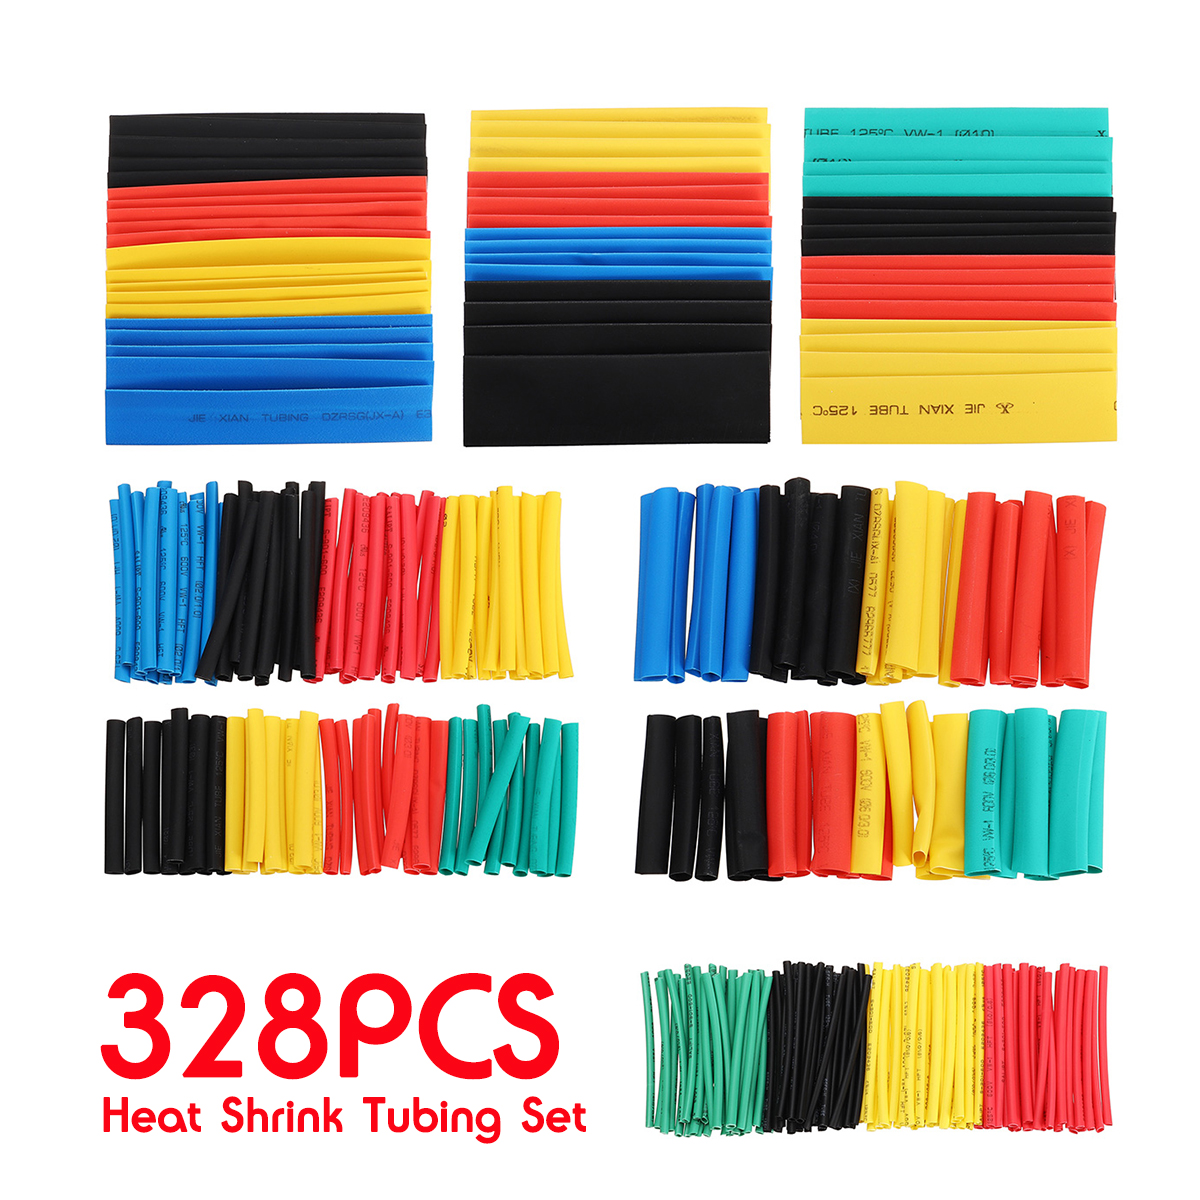 328pcs-Heat-Shrink-Tubing-Insulation-Electrical-Shrinkable-Tube-Sleeve-Cable-21-1362019-1